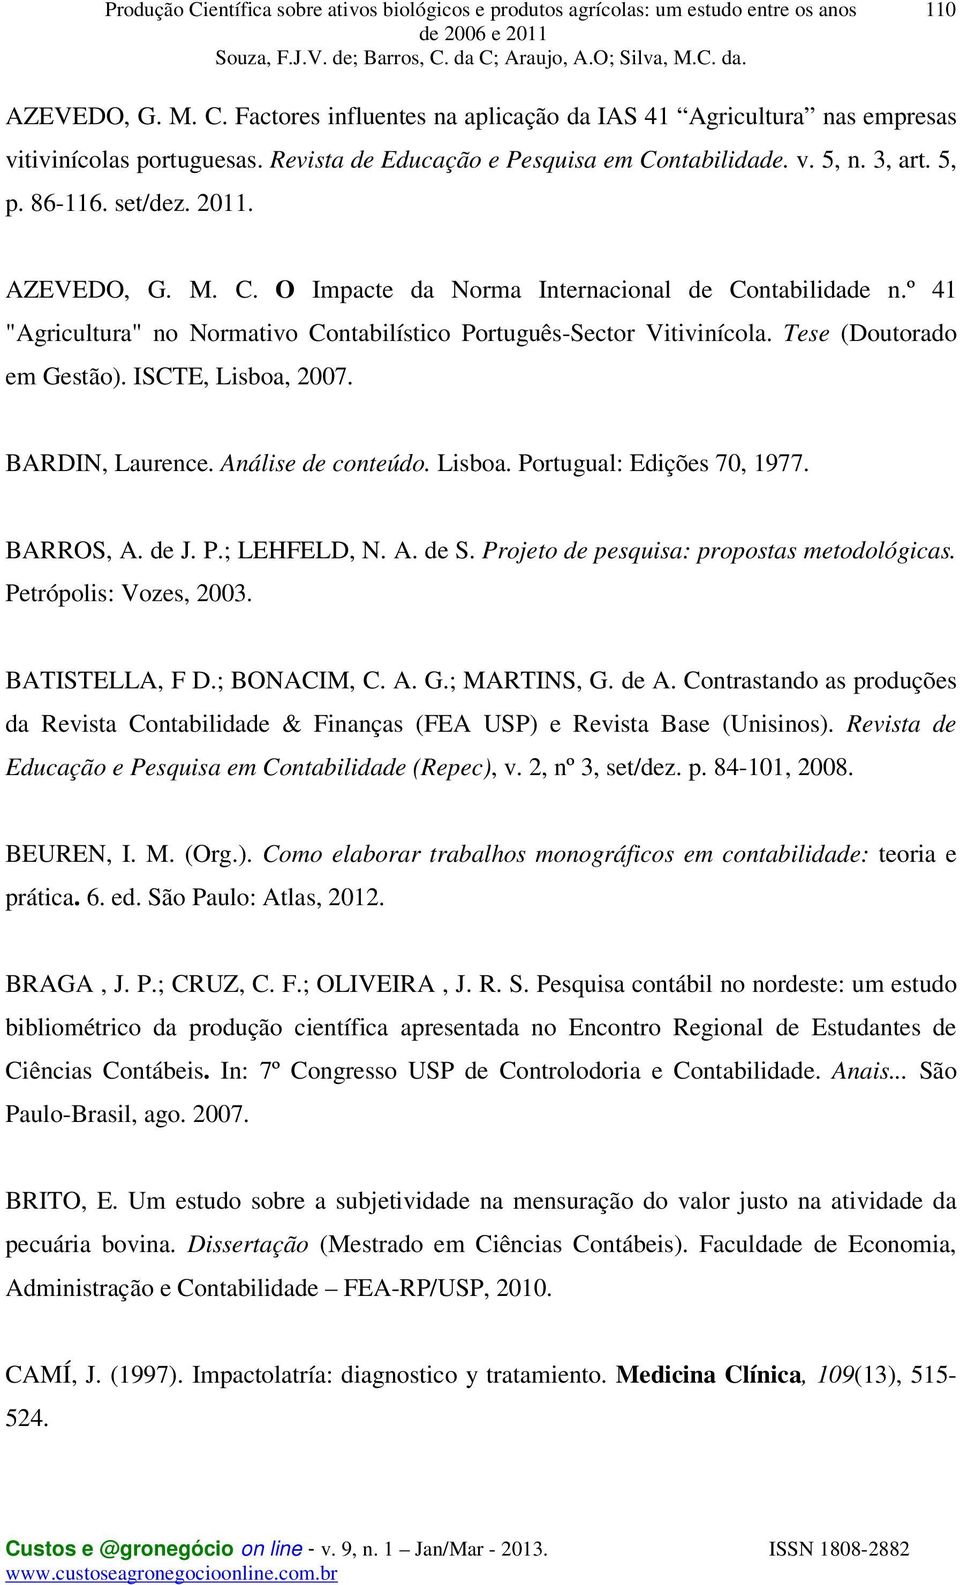 ISCTE, Lisboa, 2007. BARDIN, Laurence. Análise de conteúdo. Lisboa. Portugual: Edições 70, 1977. BARROS, A. de J. P.; LEHFELD, N. A. de S. Projeto de pesquisa: propostas metodológicas.